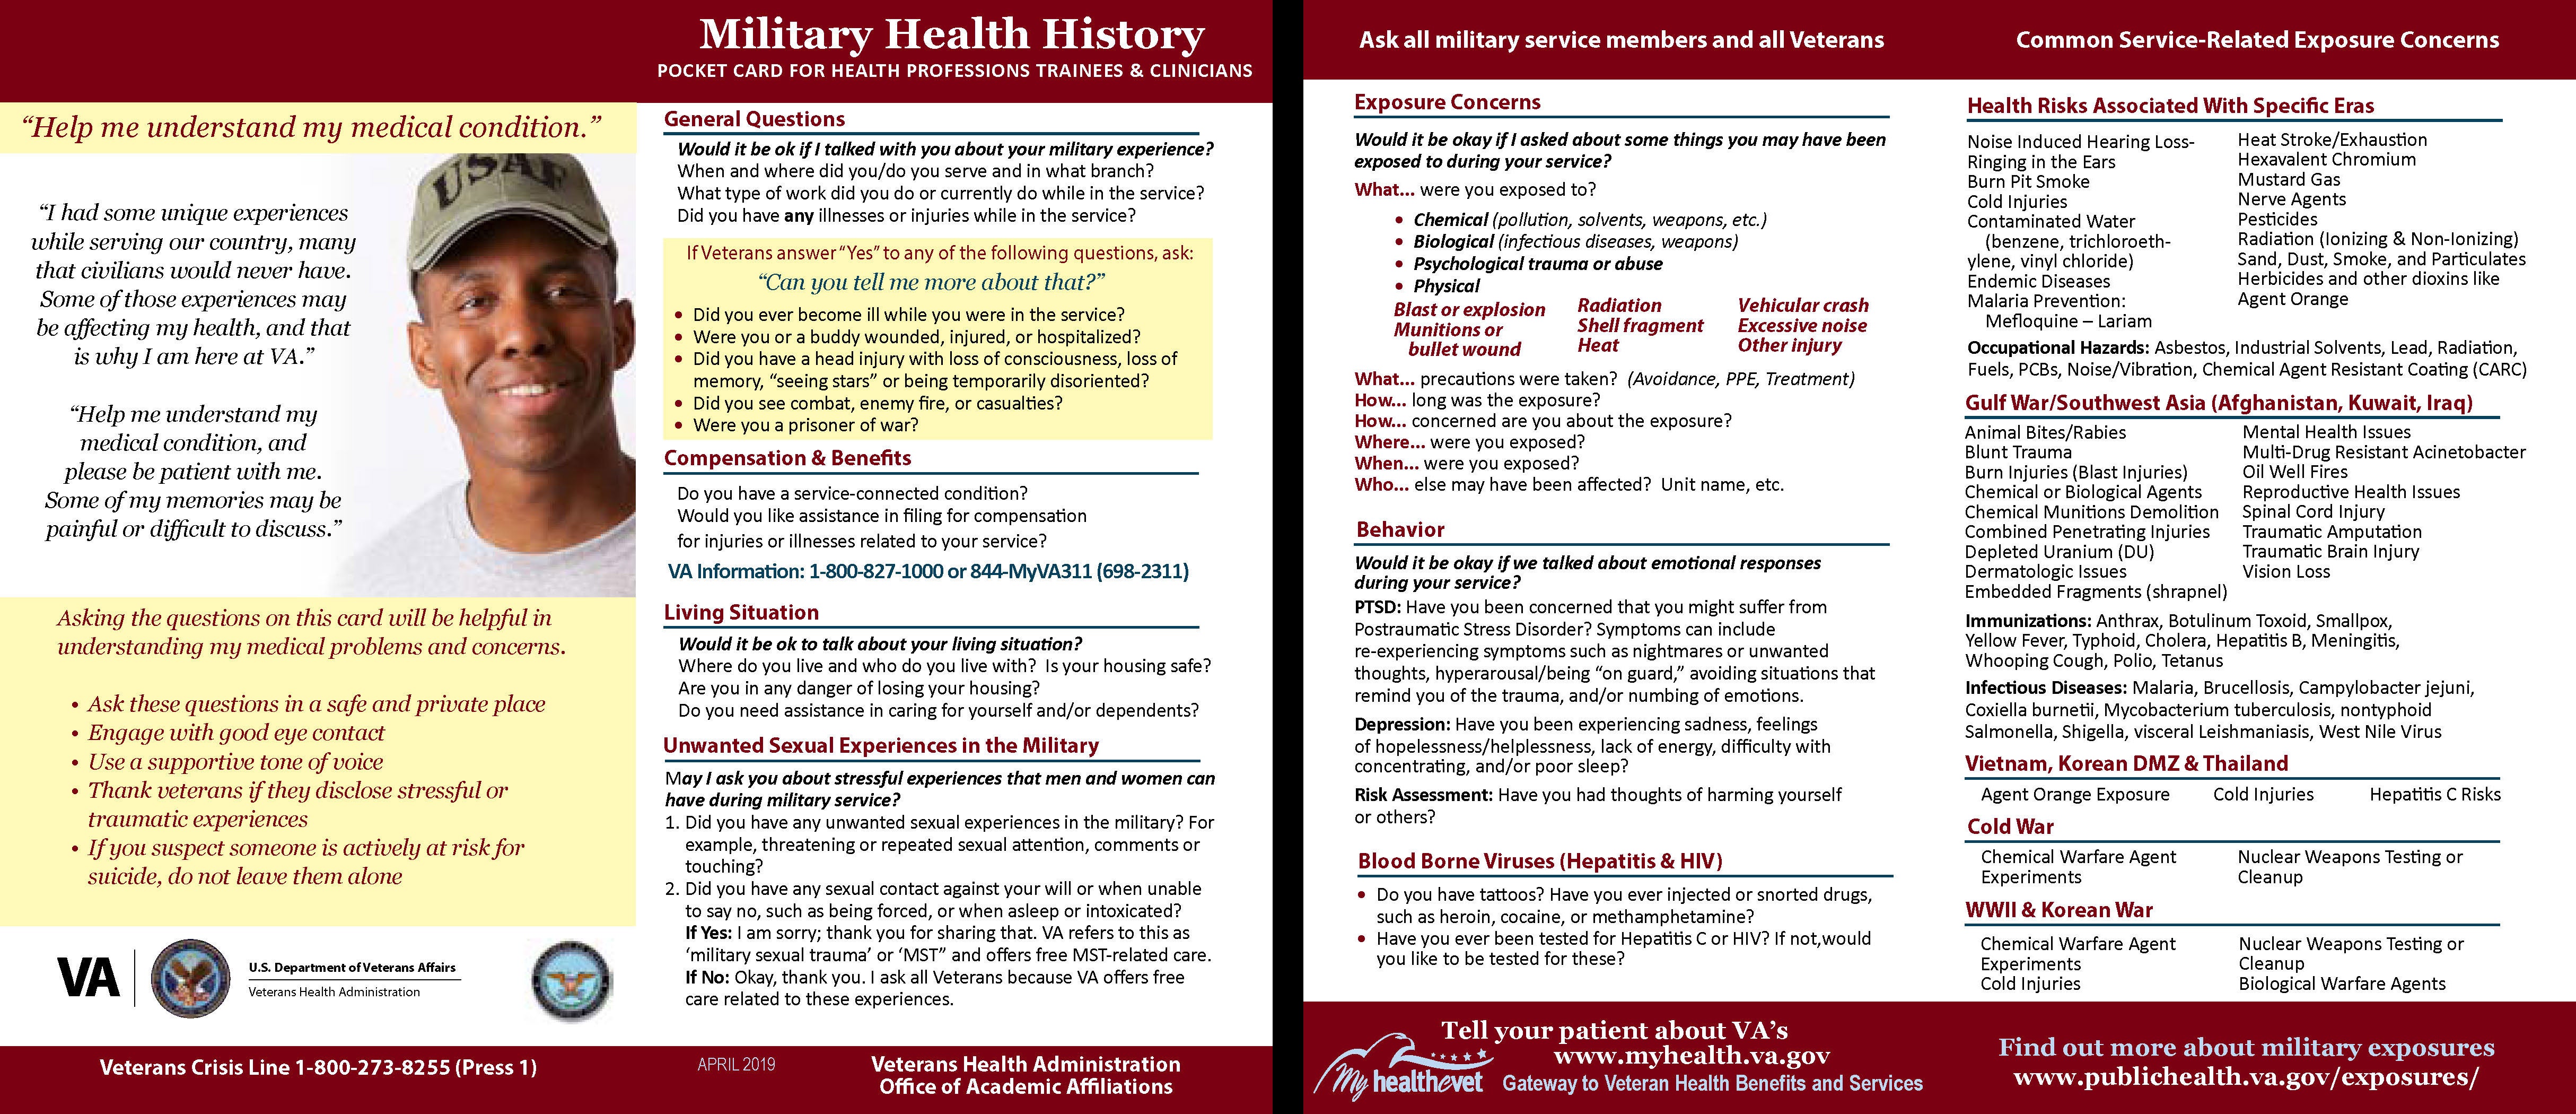 Military Health History Card